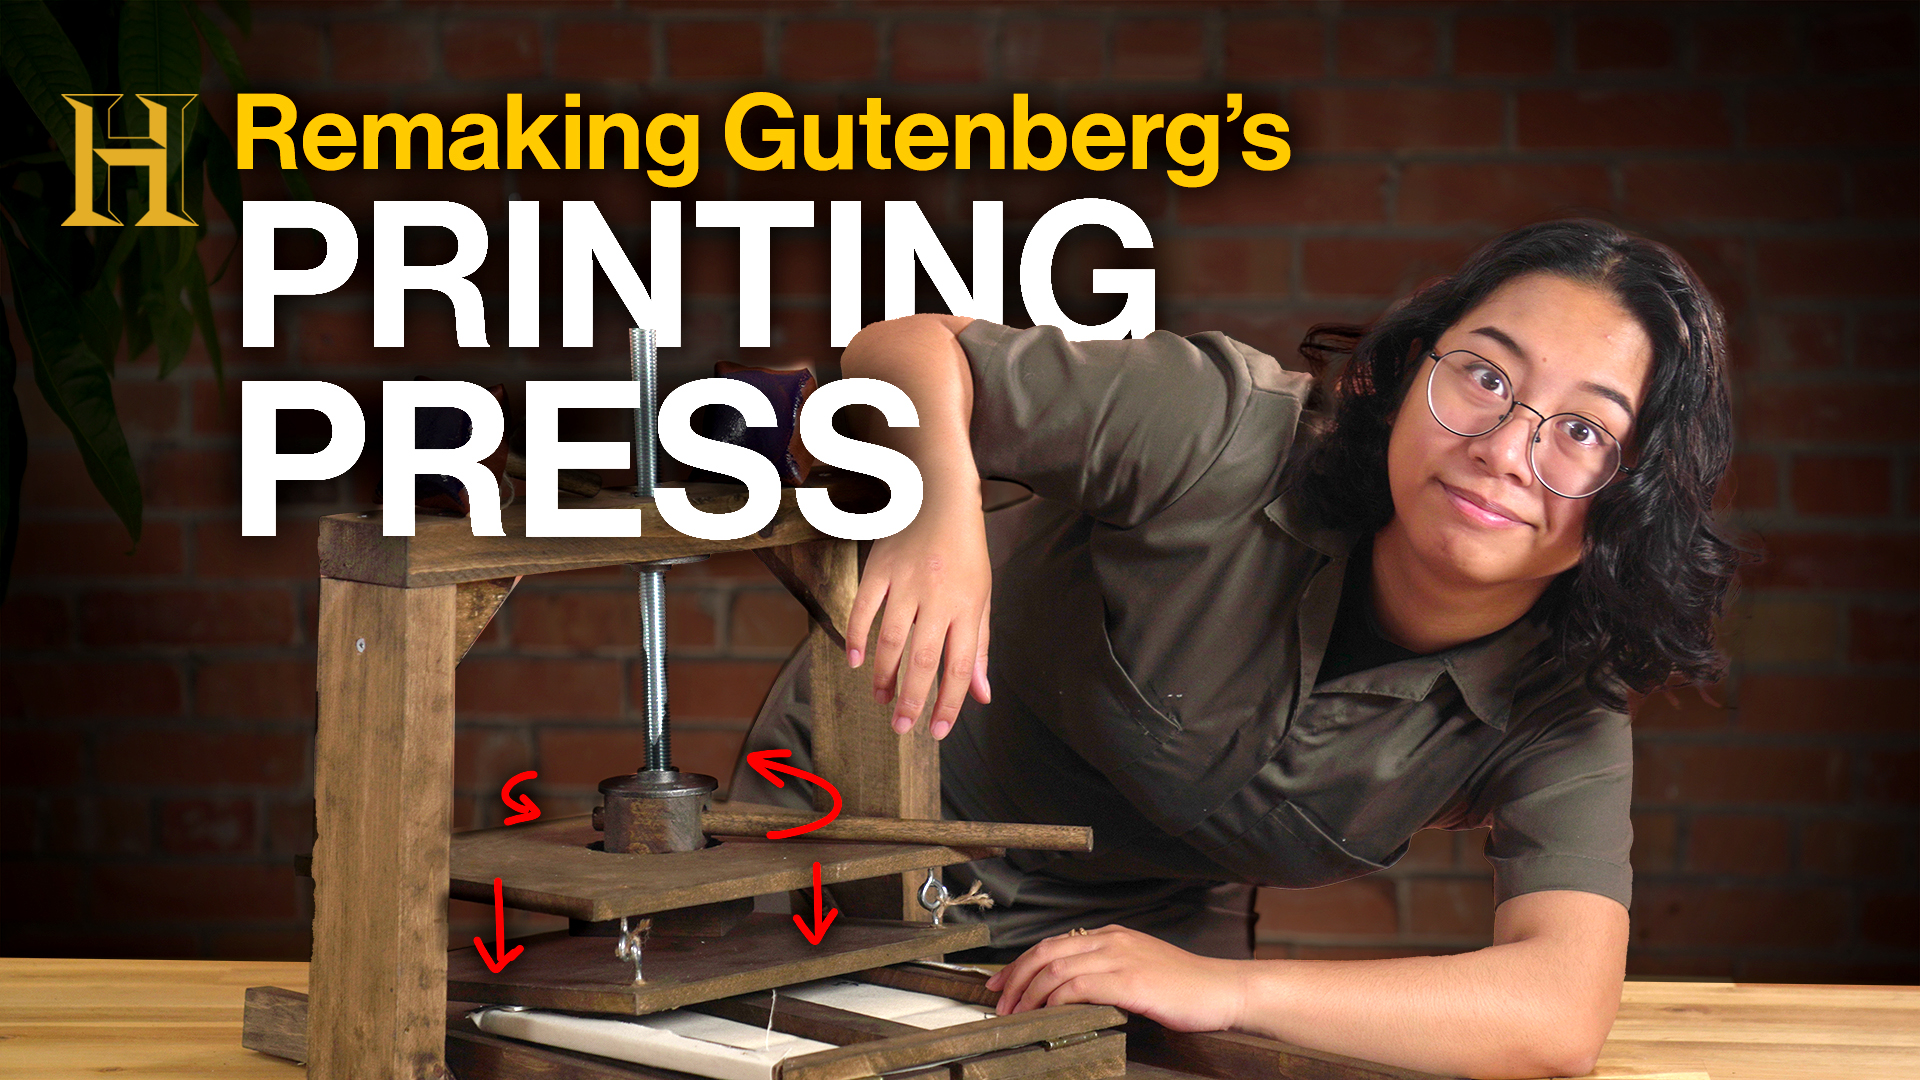 Gutenberg Press — International Printing Museum